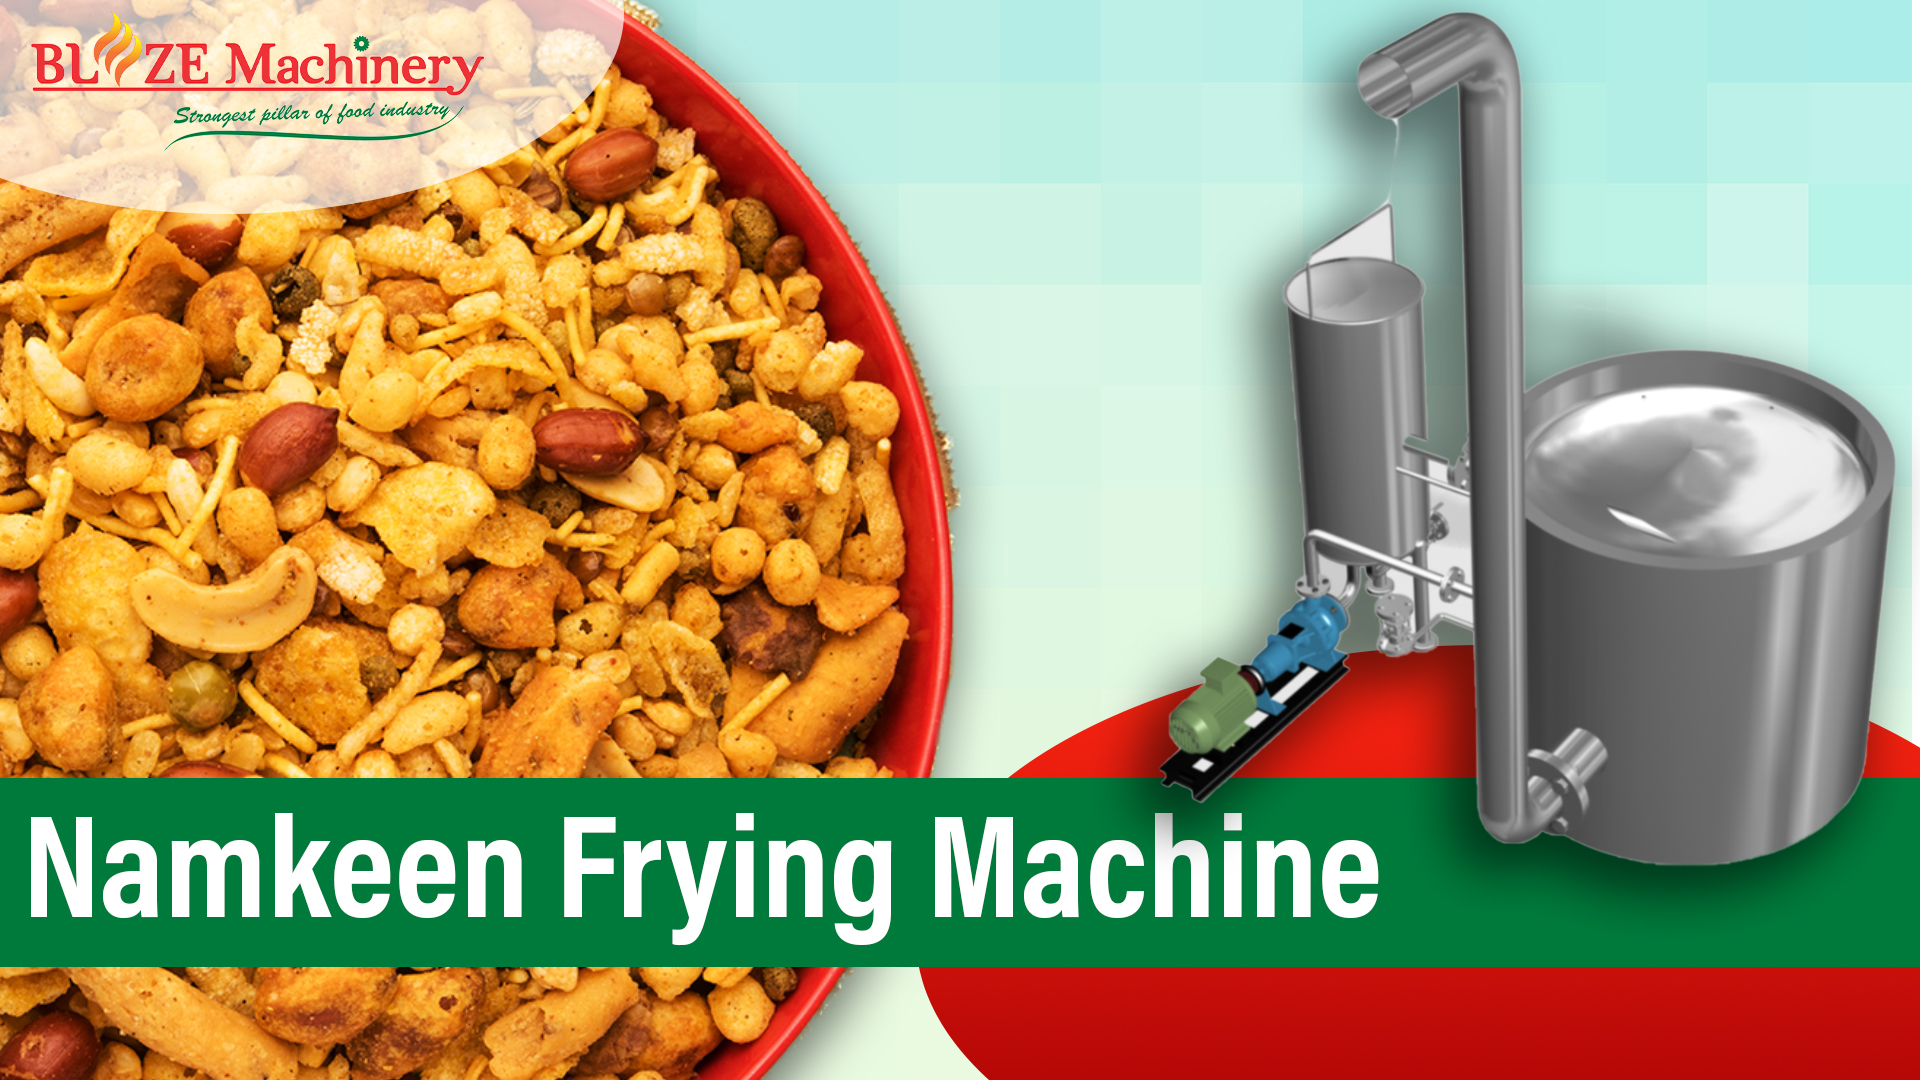 Namkeen Frying Machine